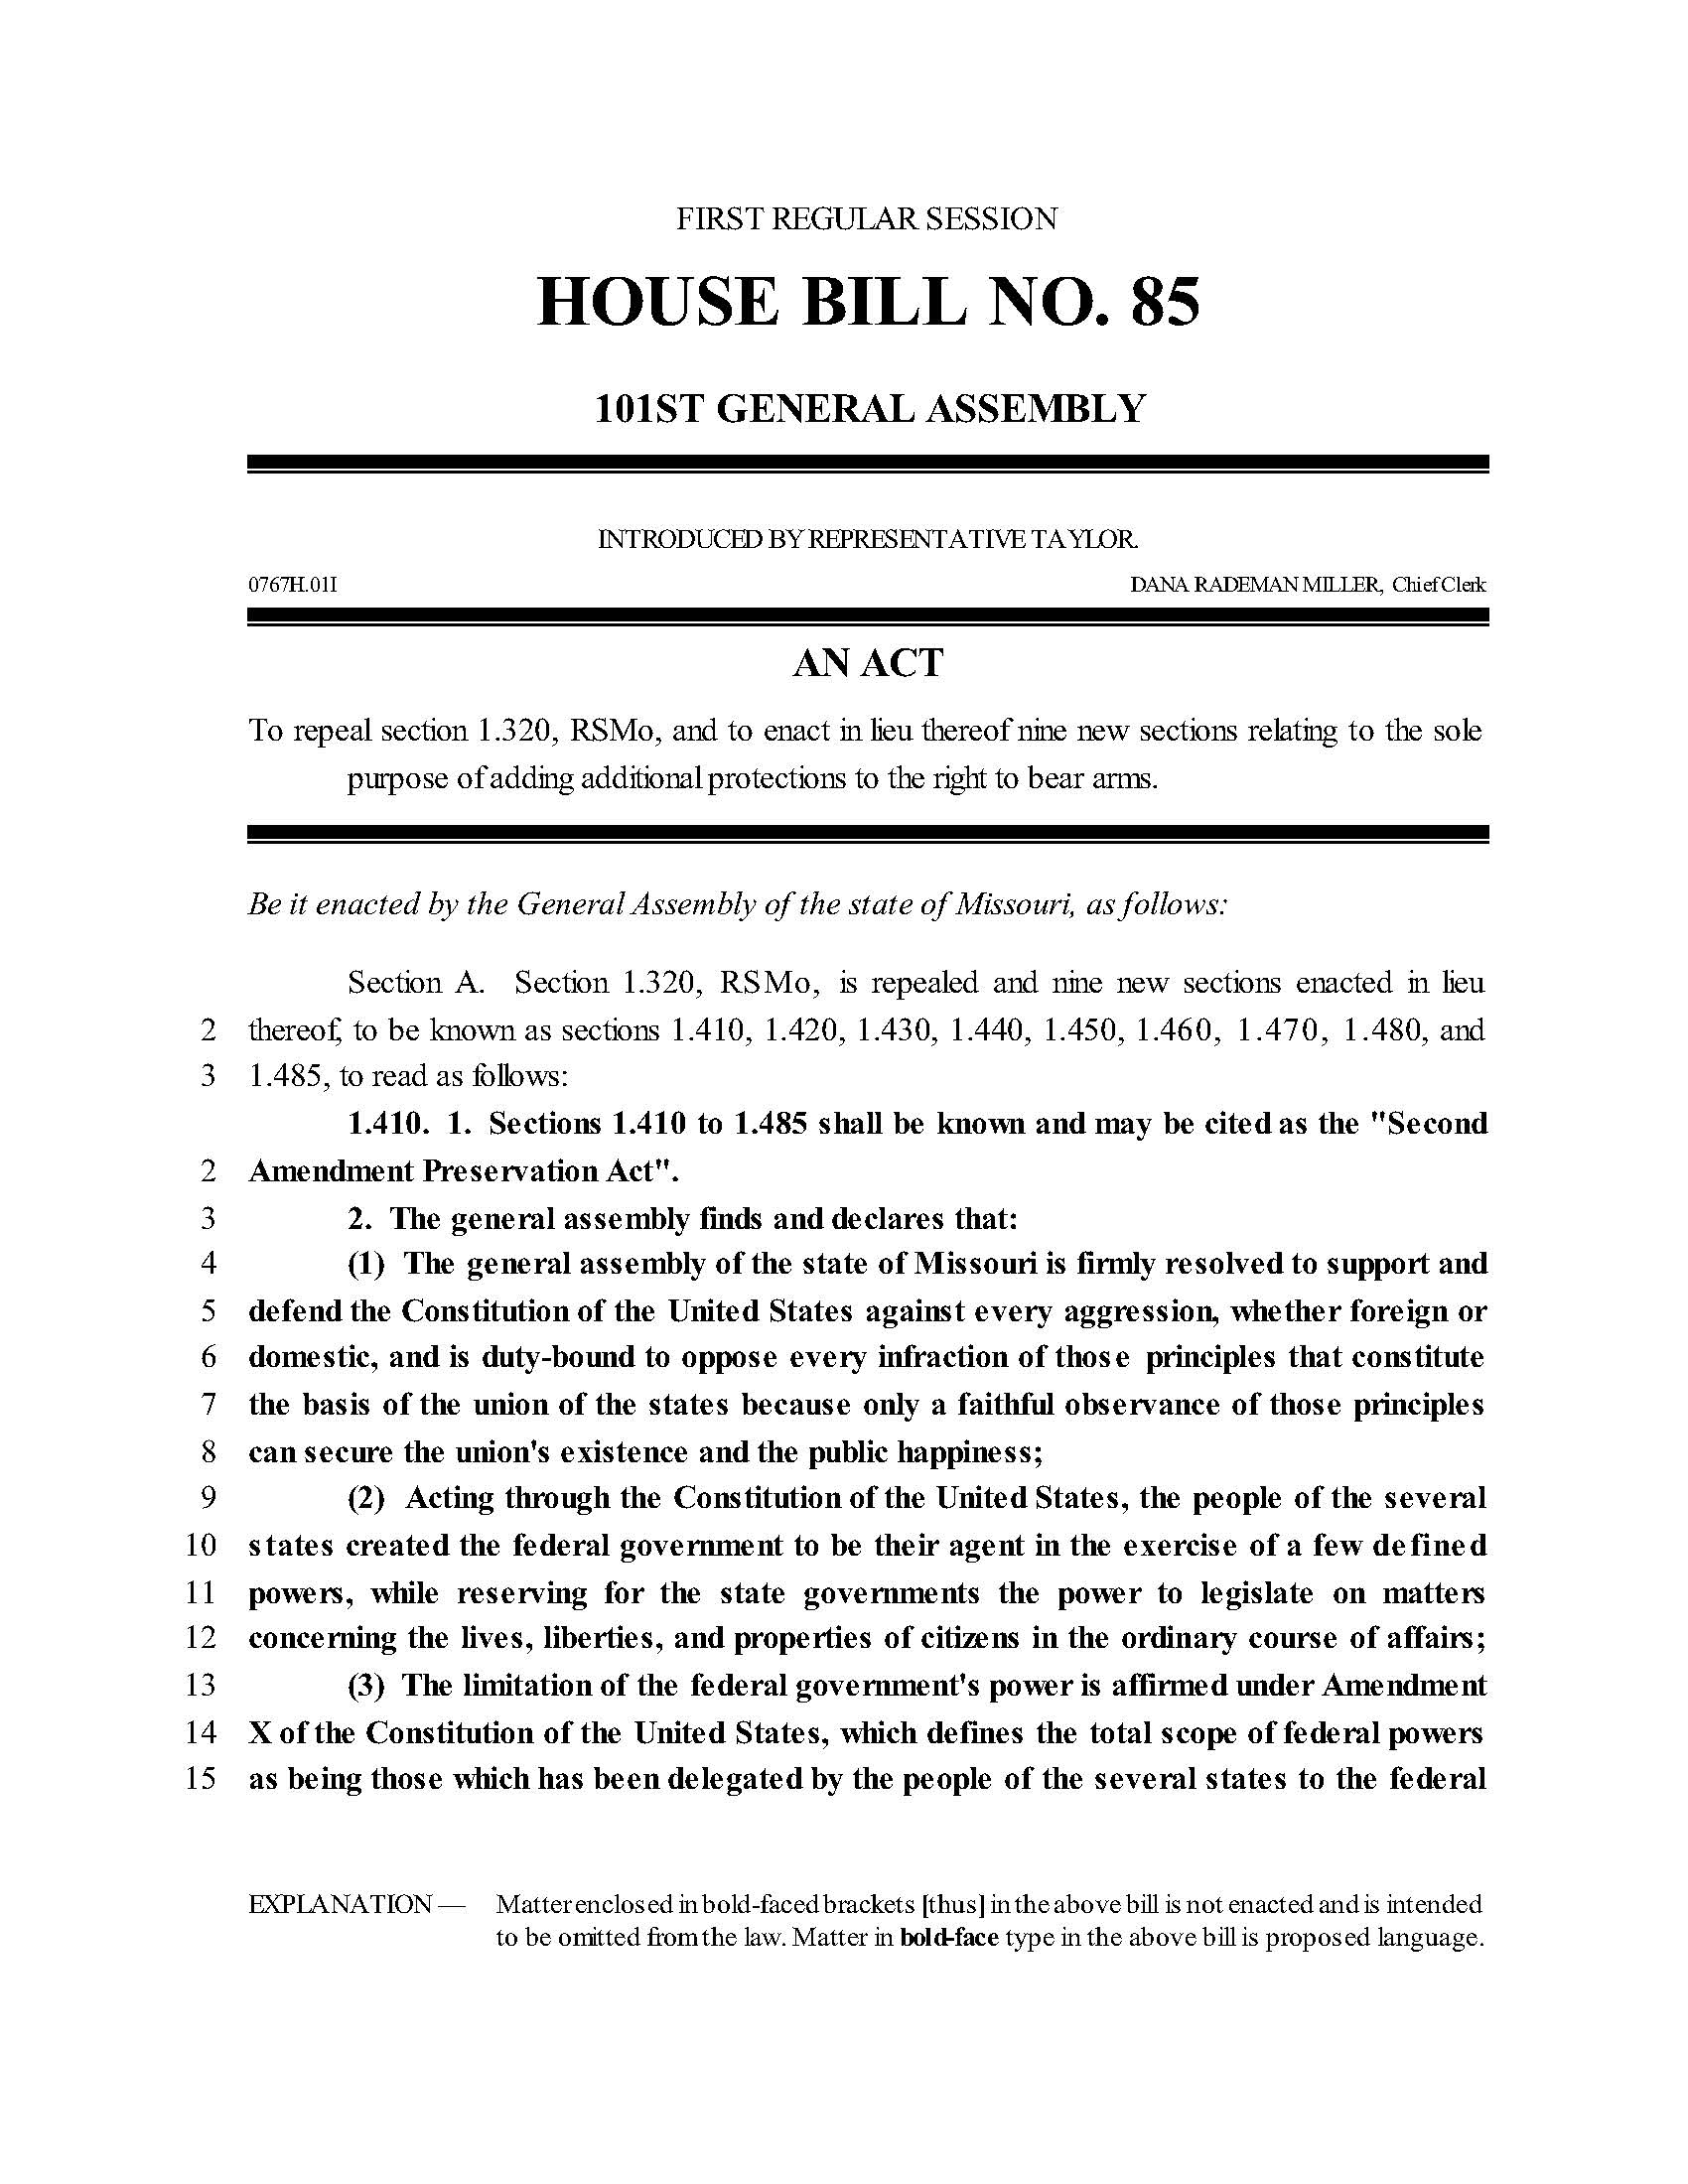 Missouri Second Amendment Preservation Act Page 1